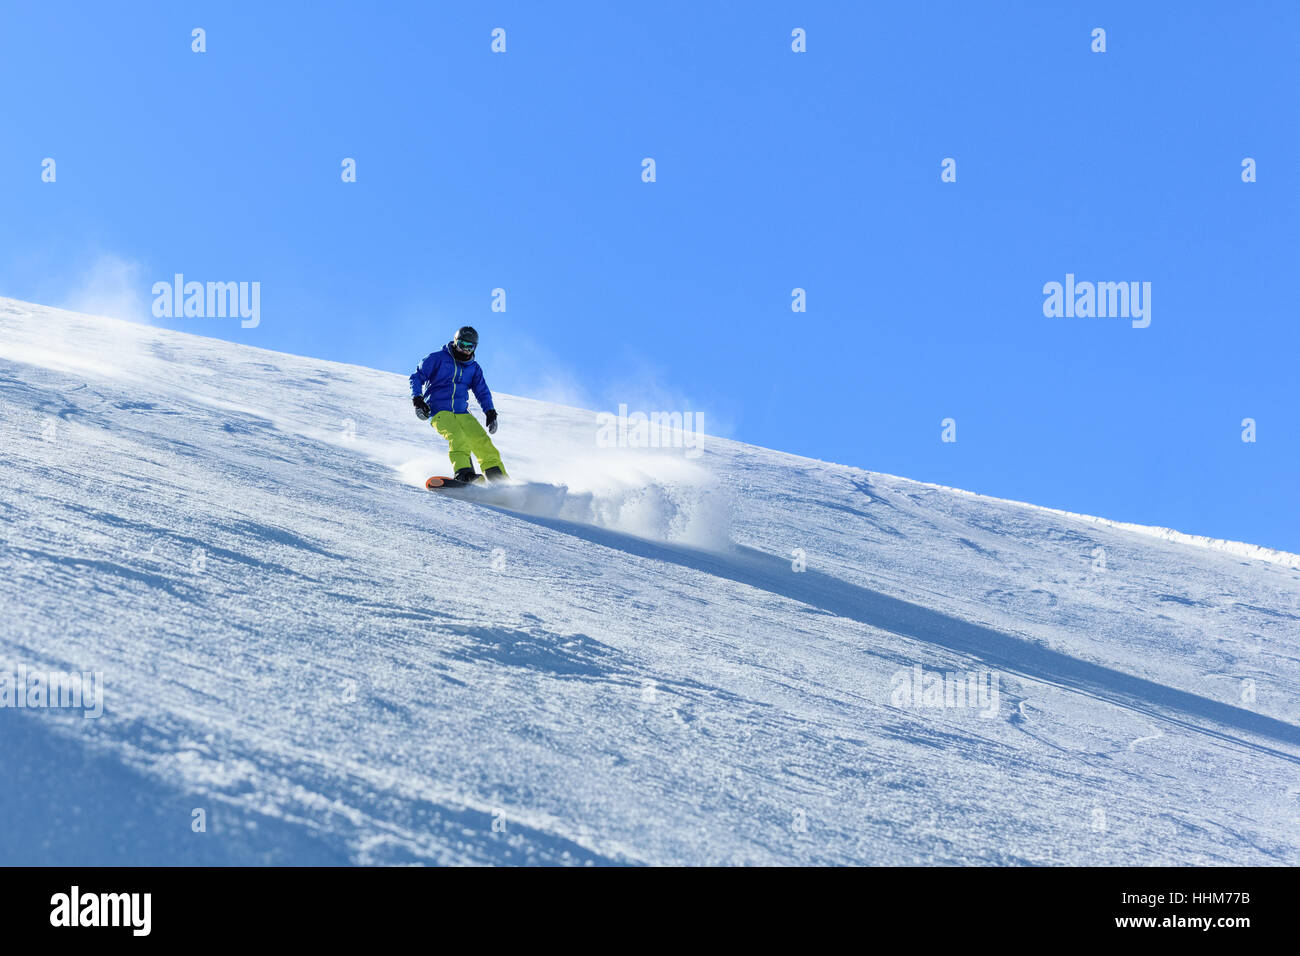 Winter snowboarding activity Stock Photo